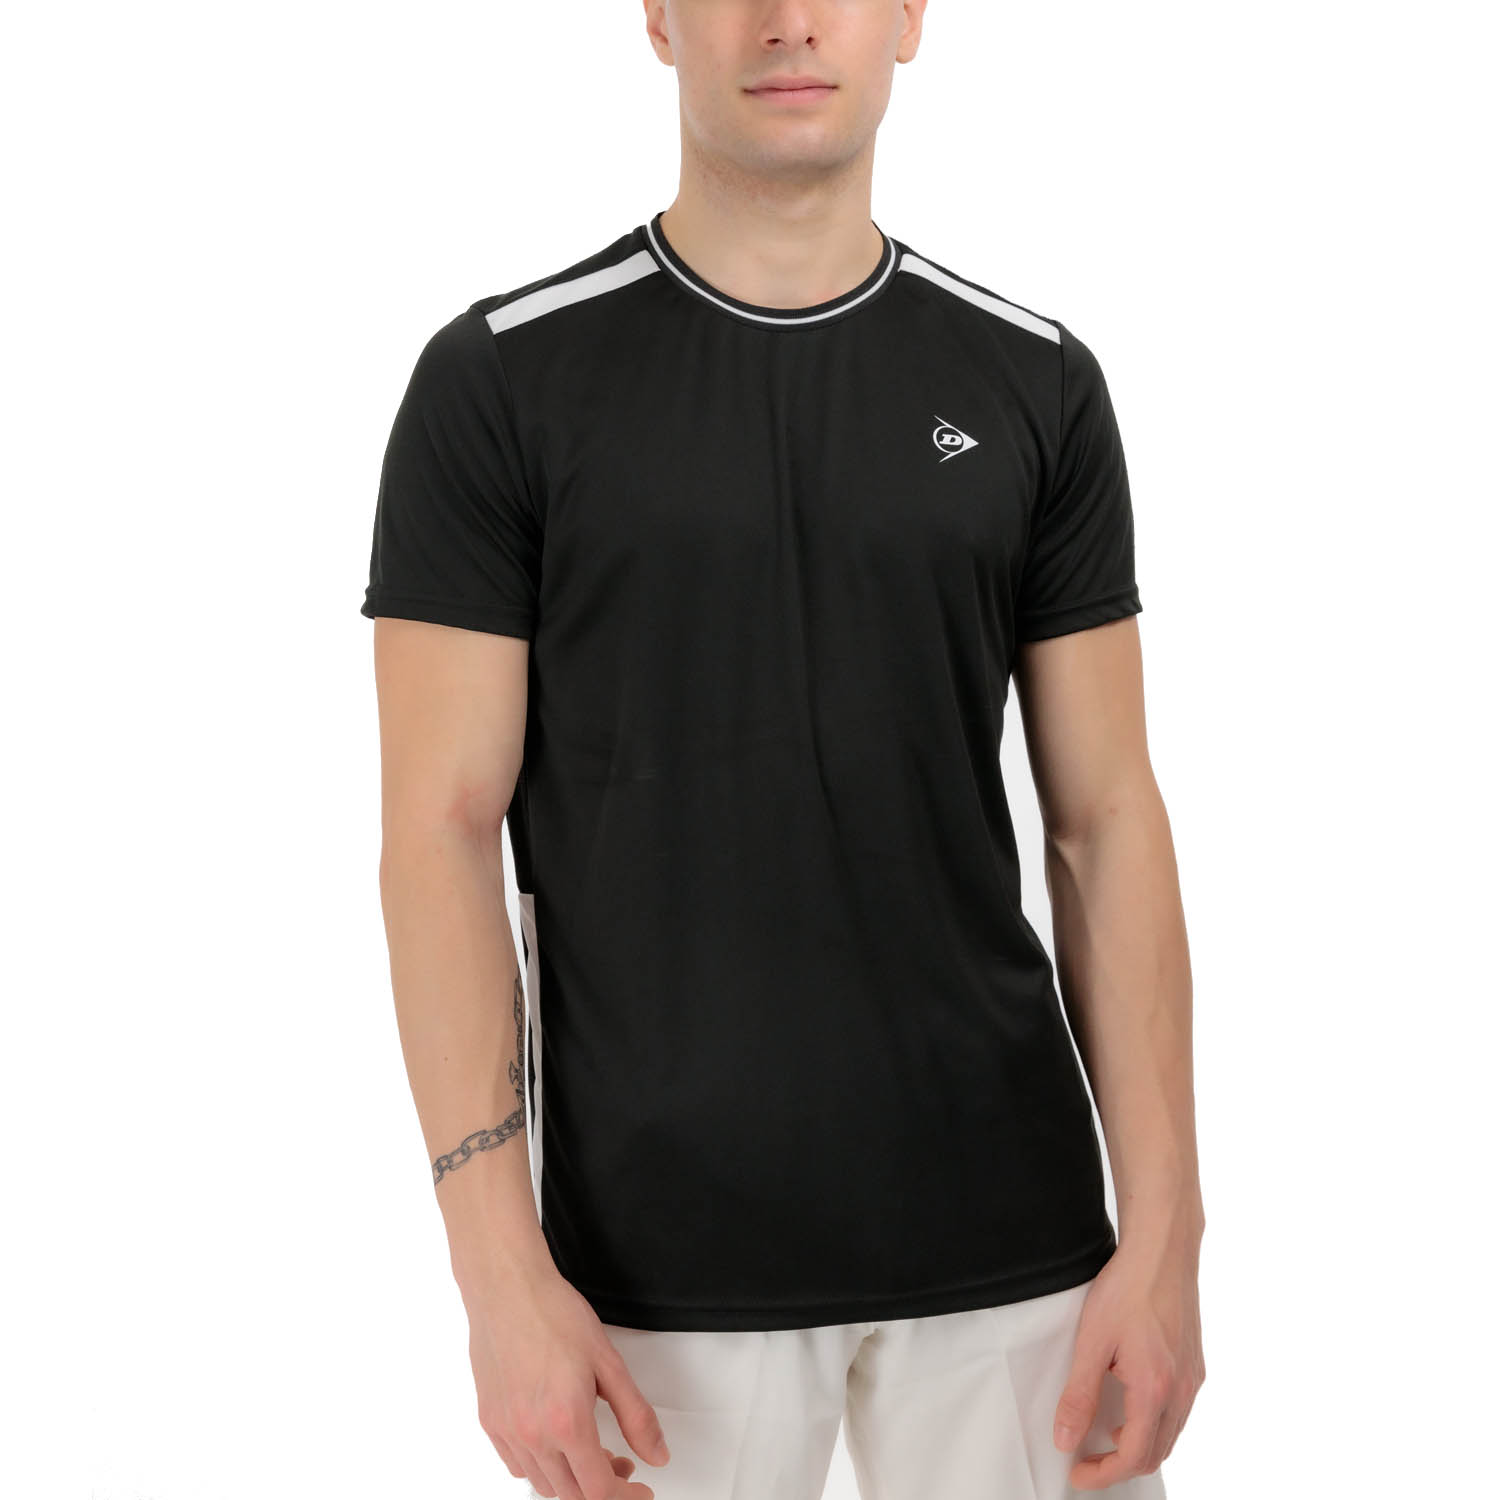 Dunlop Club Crew Camiseta - Black/White